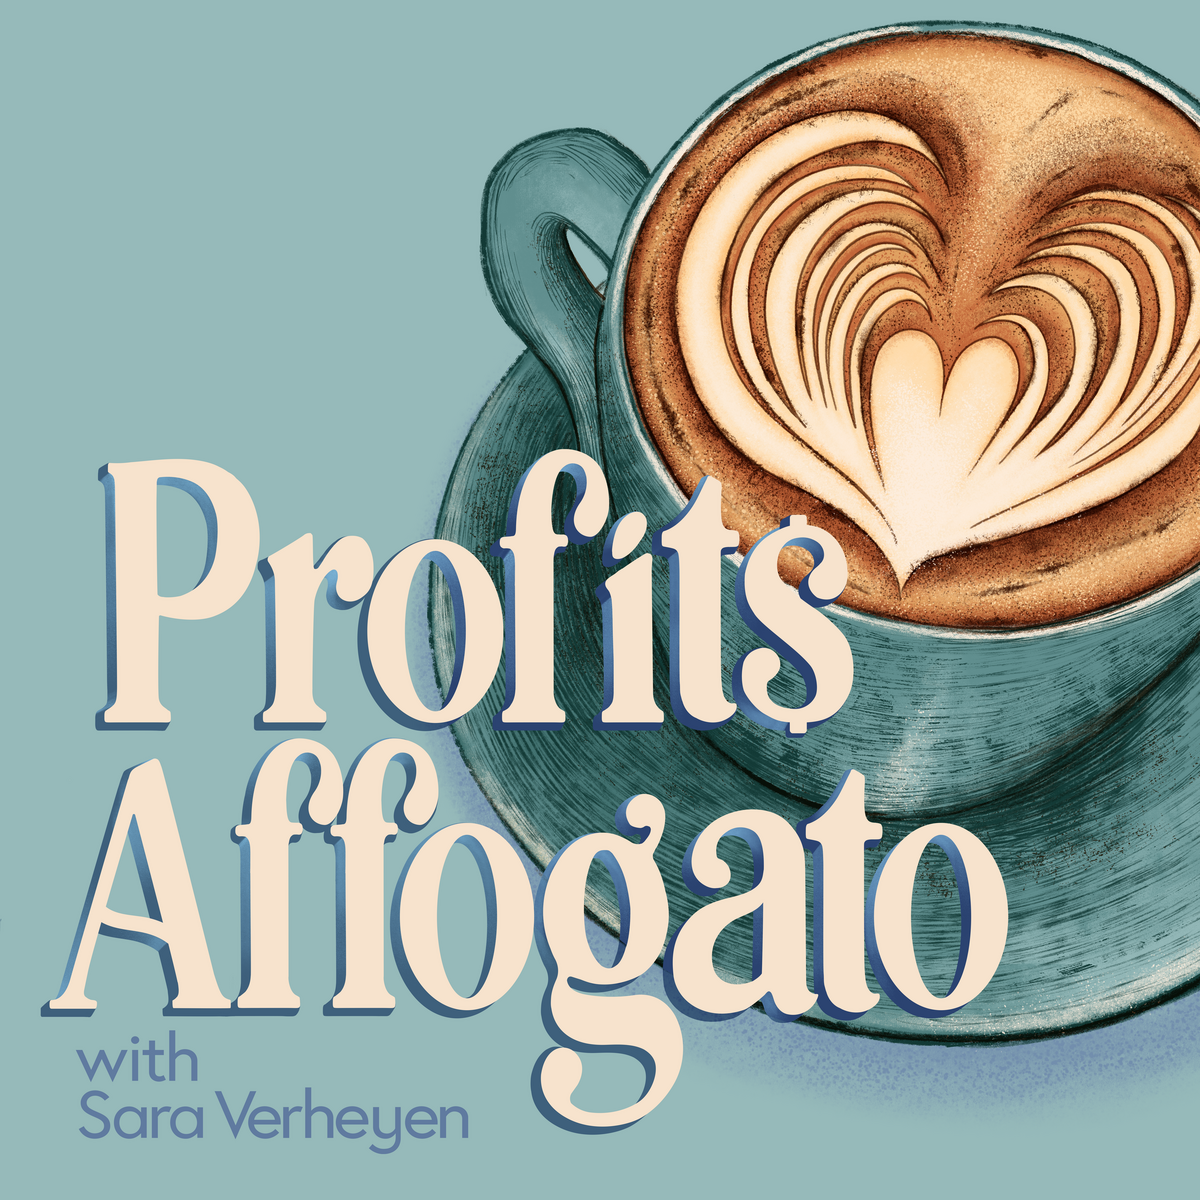 Profits Affogato - Podcast Cover RGB @300dpi